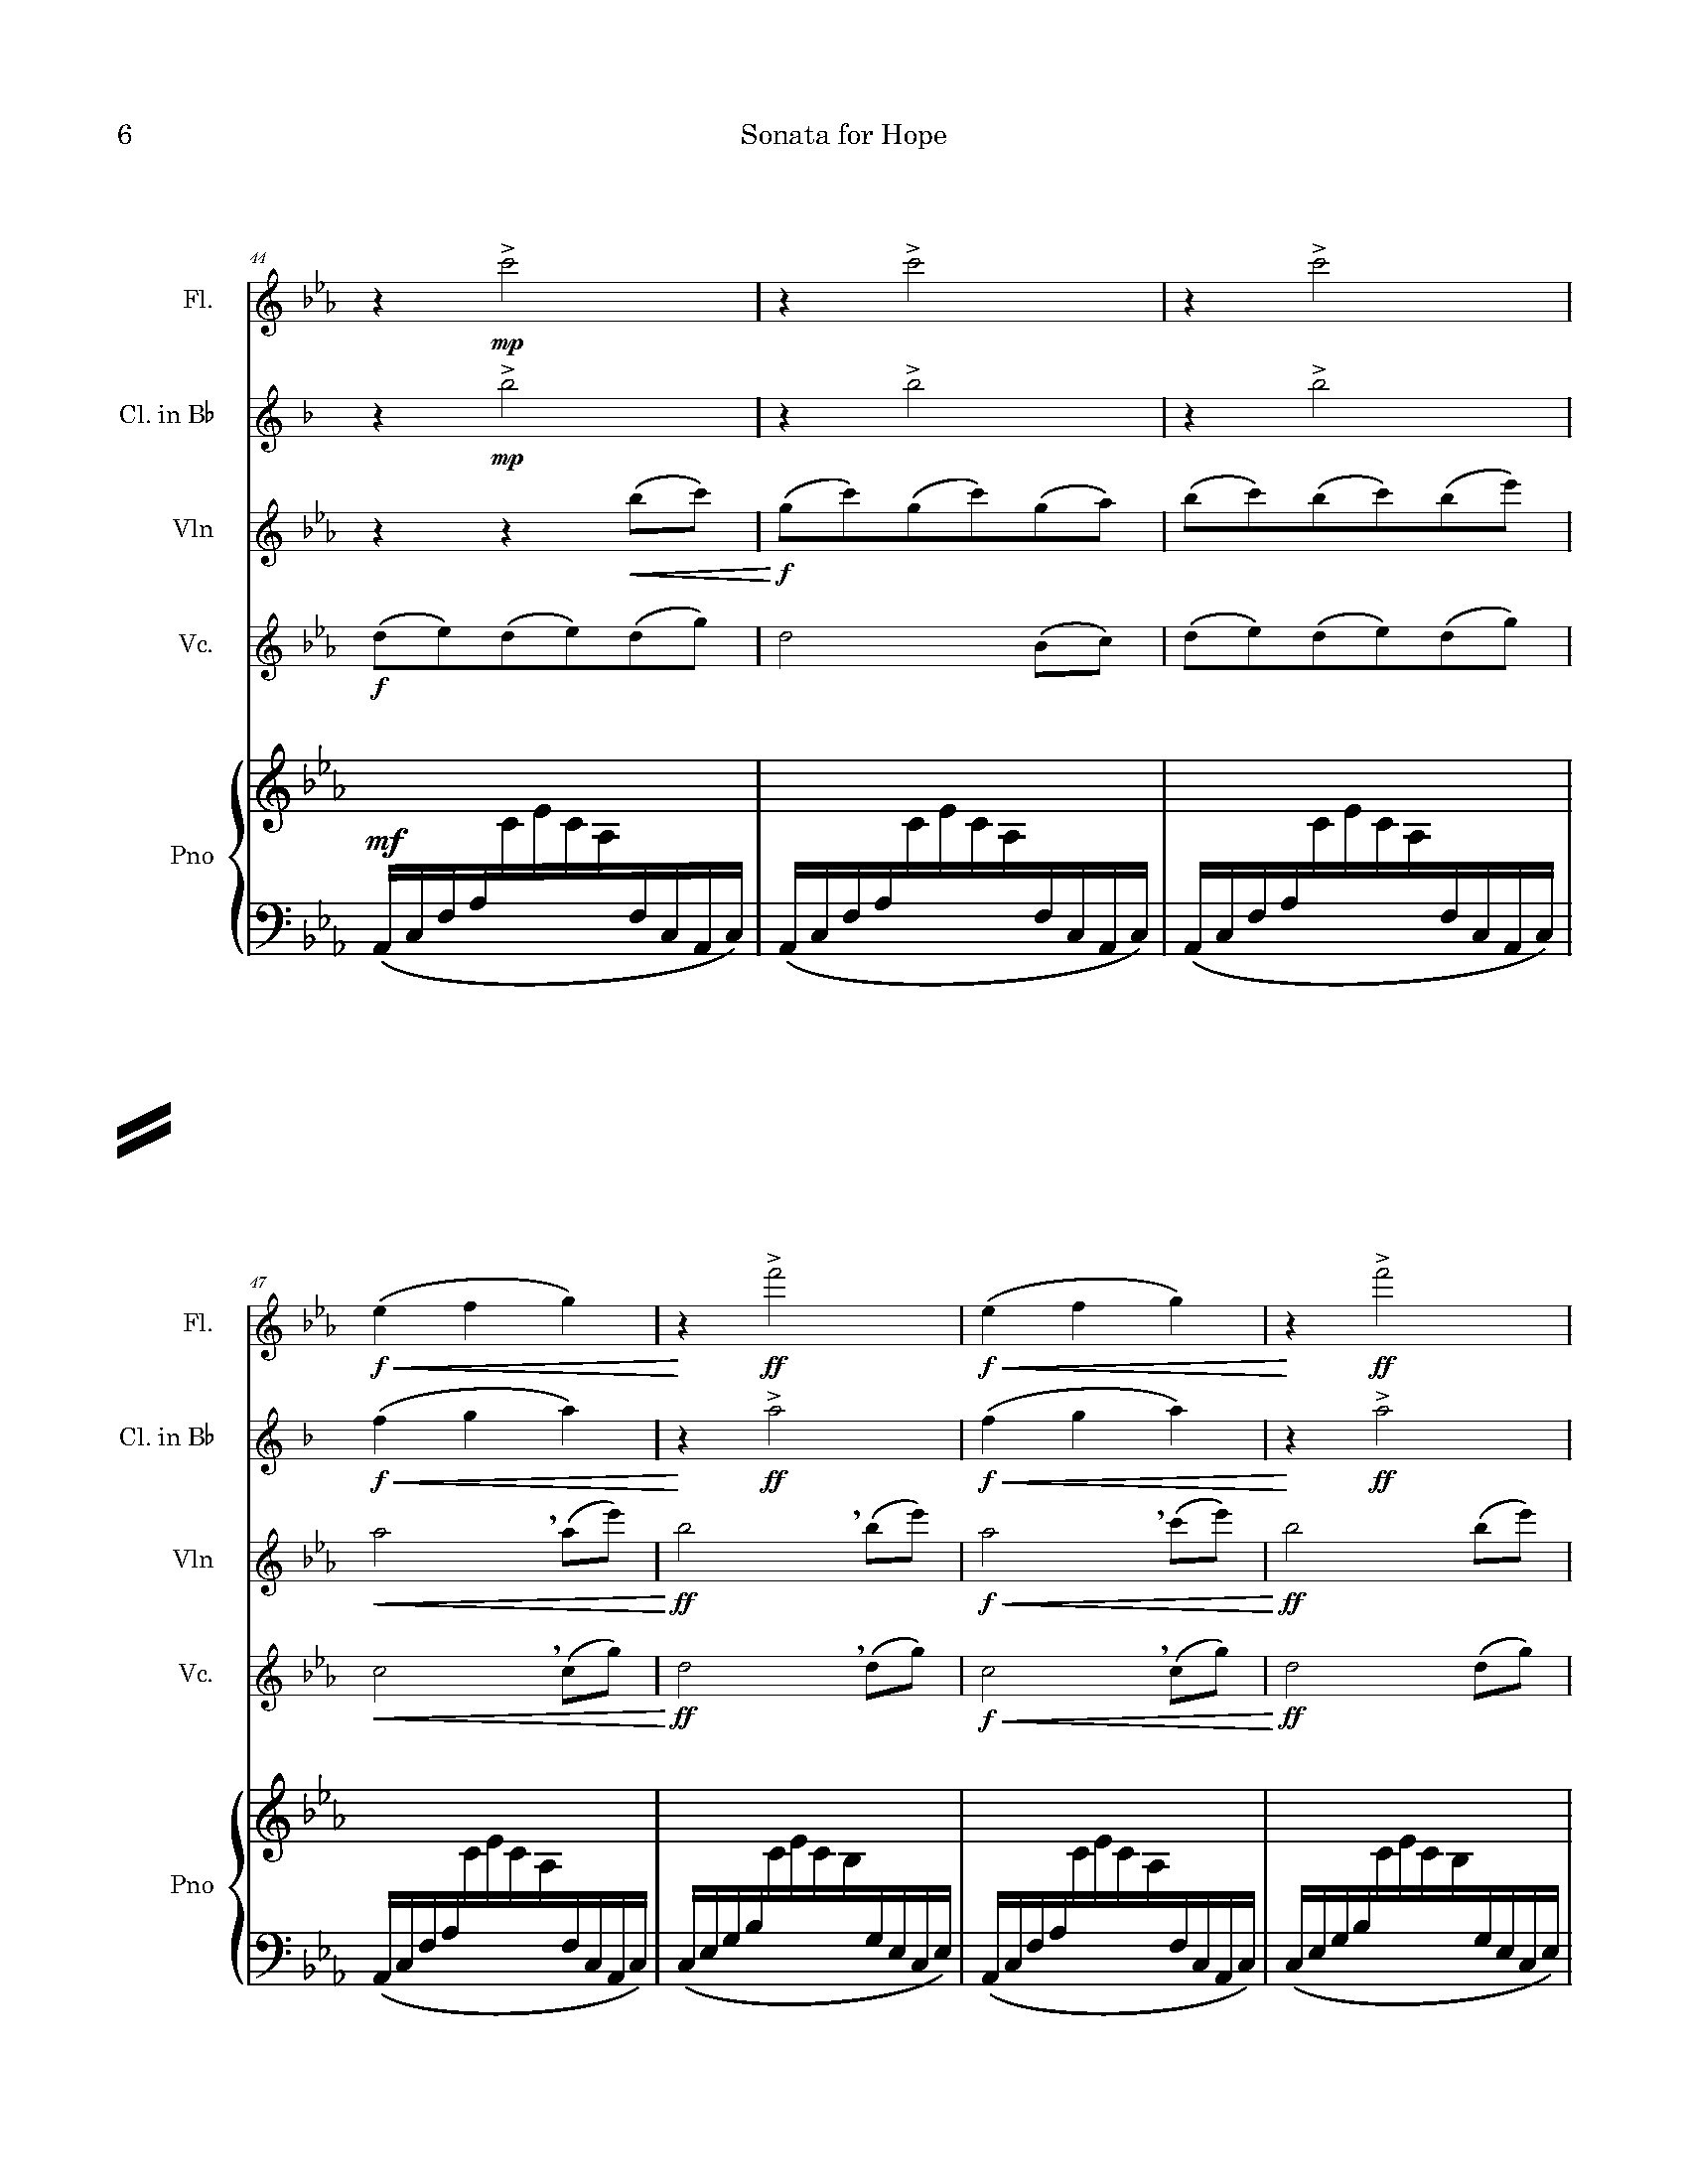 Sonata for Hope - Piano Score_Page_06.jpg